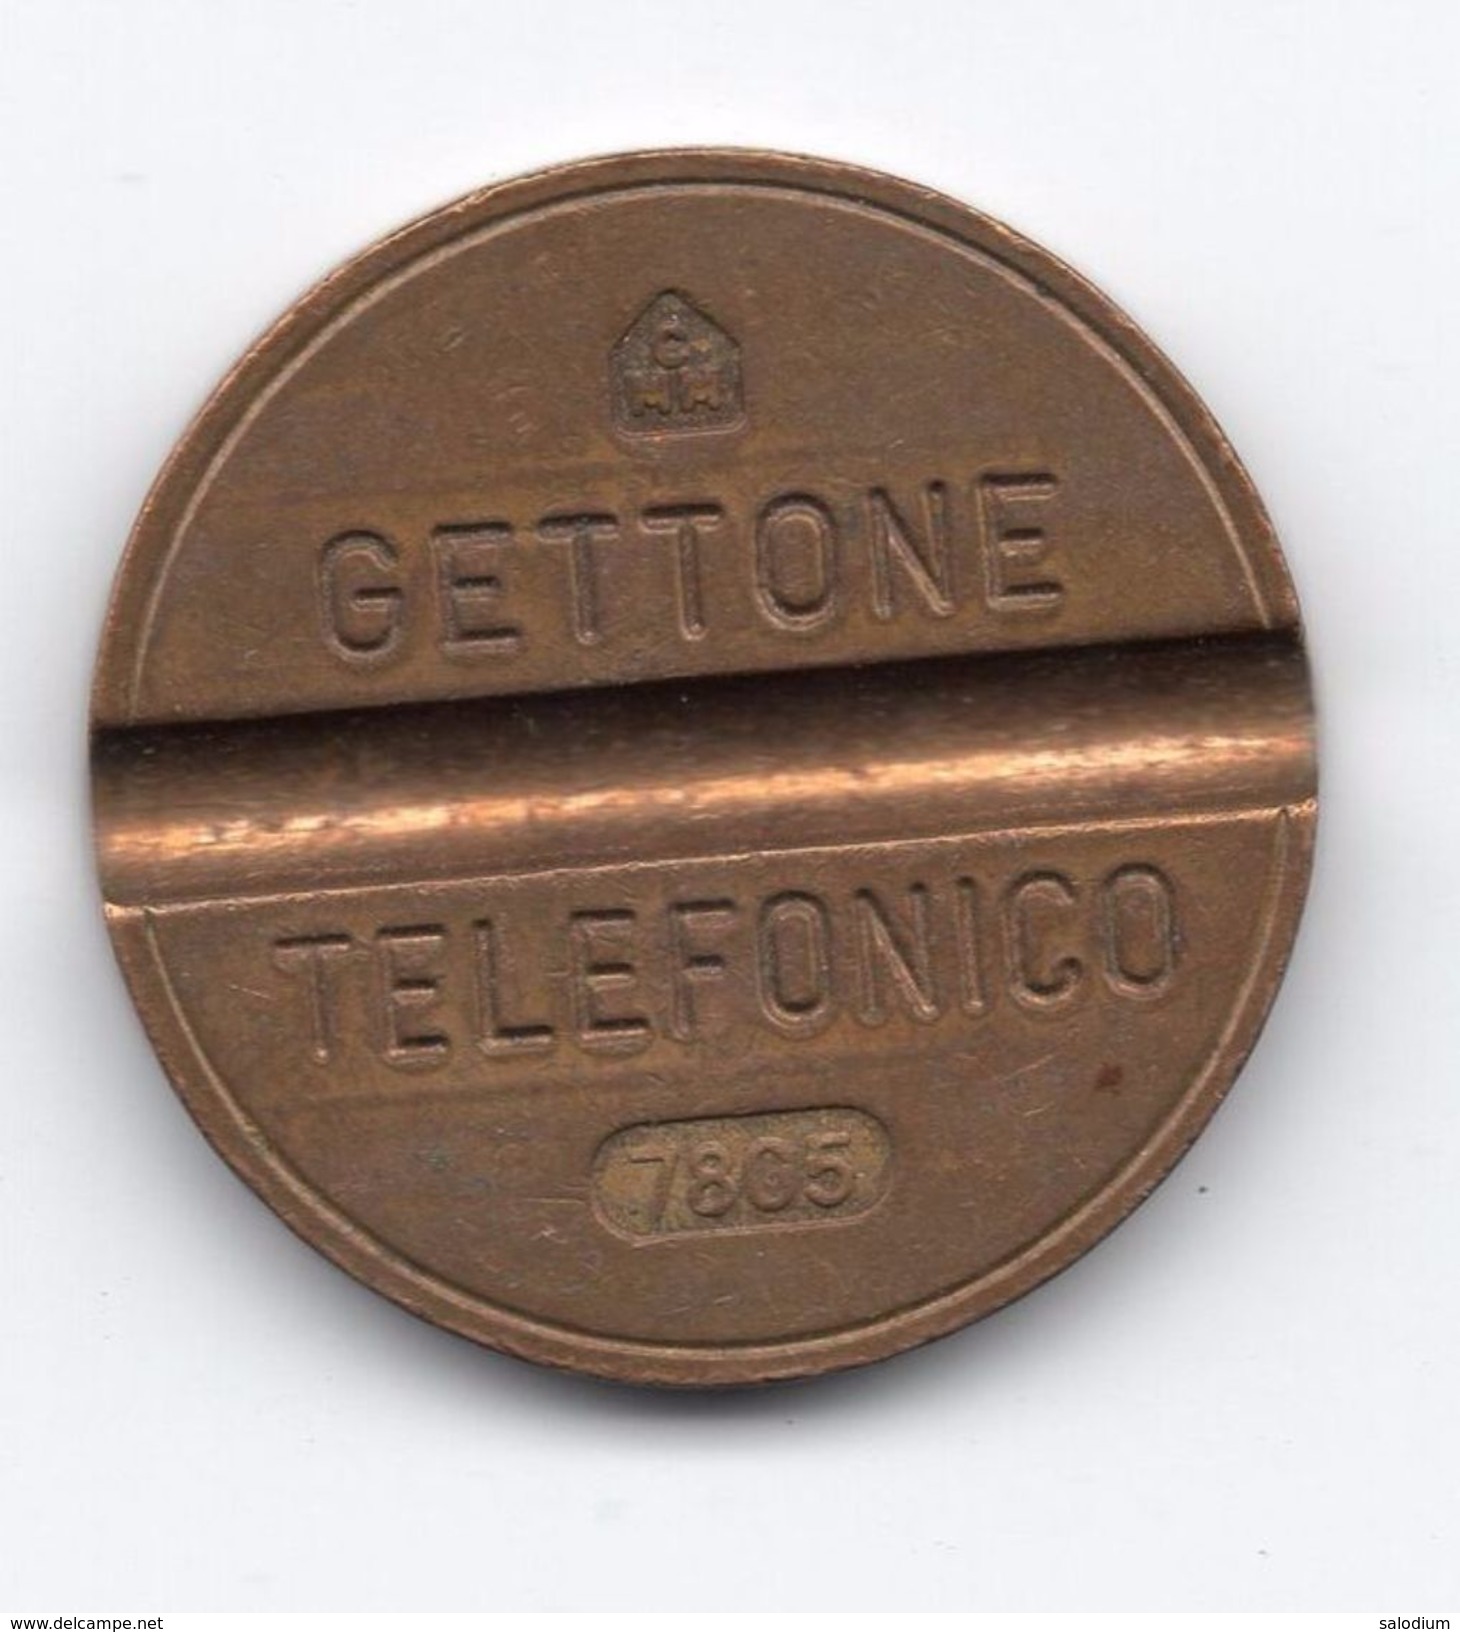 Gettone Telefonico 7805 Token Telephone - (Id-791) - Firma's